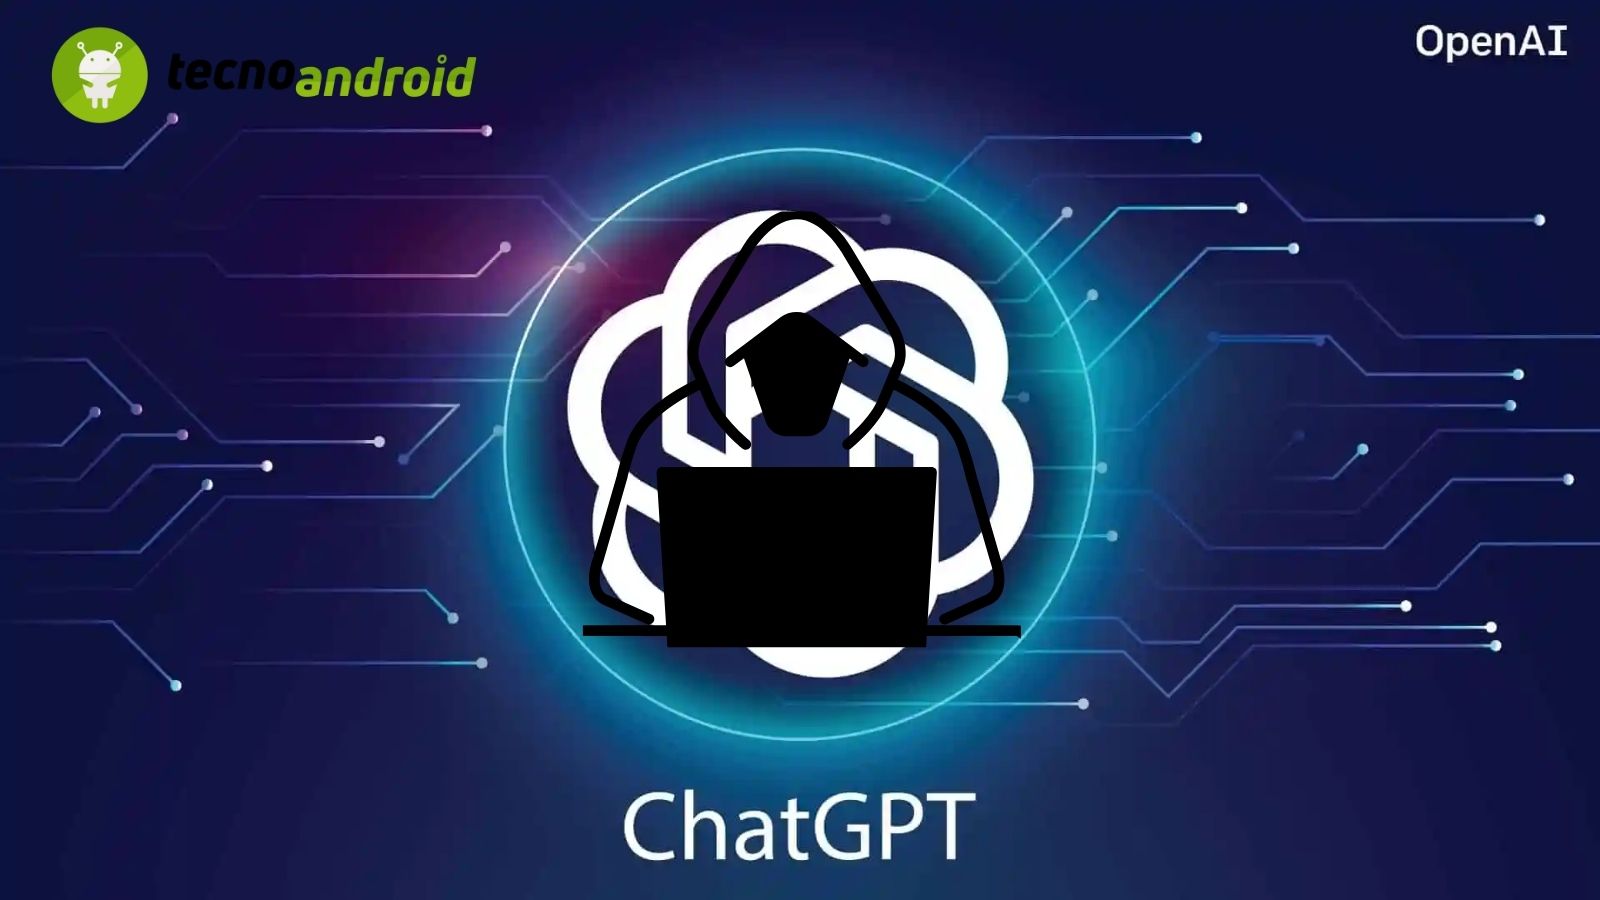 Sicurezza informatica: Hacker preoccupati per l'uso di ChatGPT